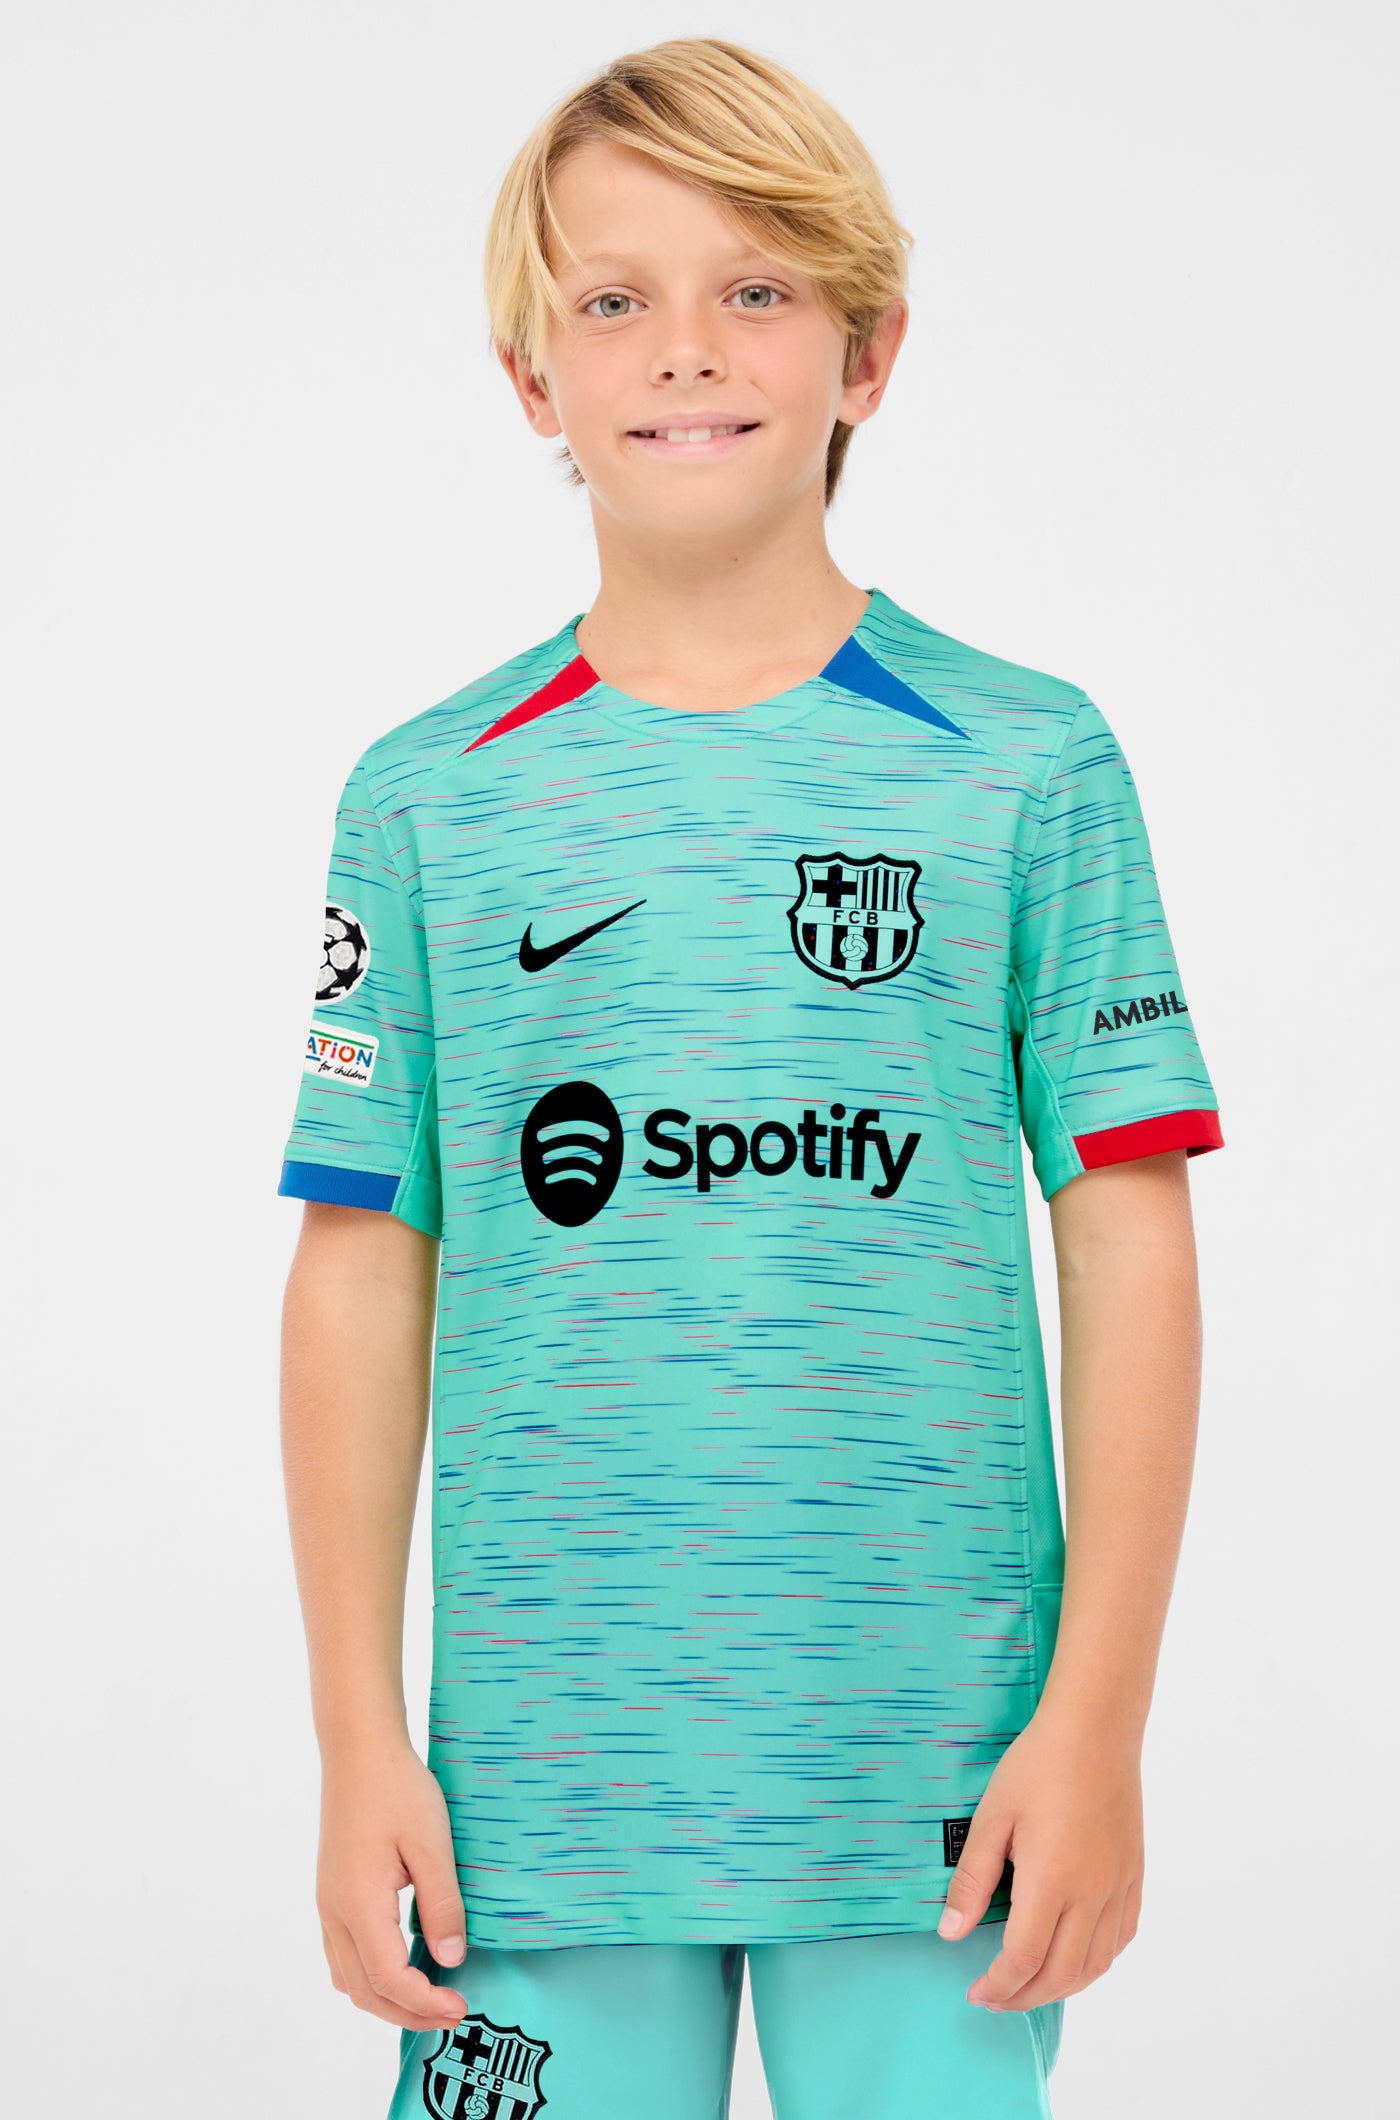 22. Raphinha – Barça Official Store Spotify Camp Nou